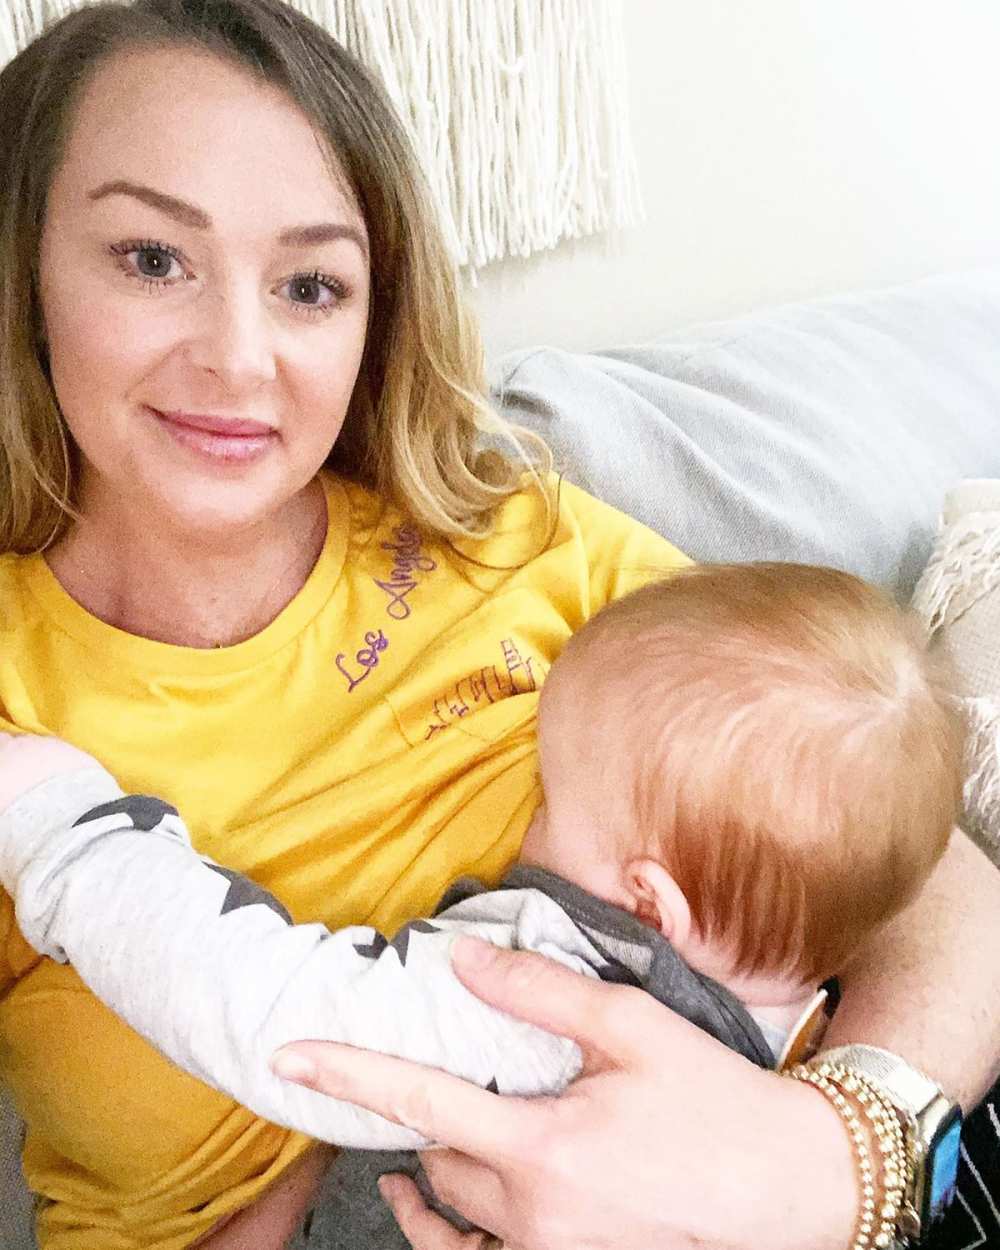 Jamie Otis Defends Breast-Feeding 12-Month-Old Son Hendrix: Stop ‘Hyper-Sexualizing’ Nursing